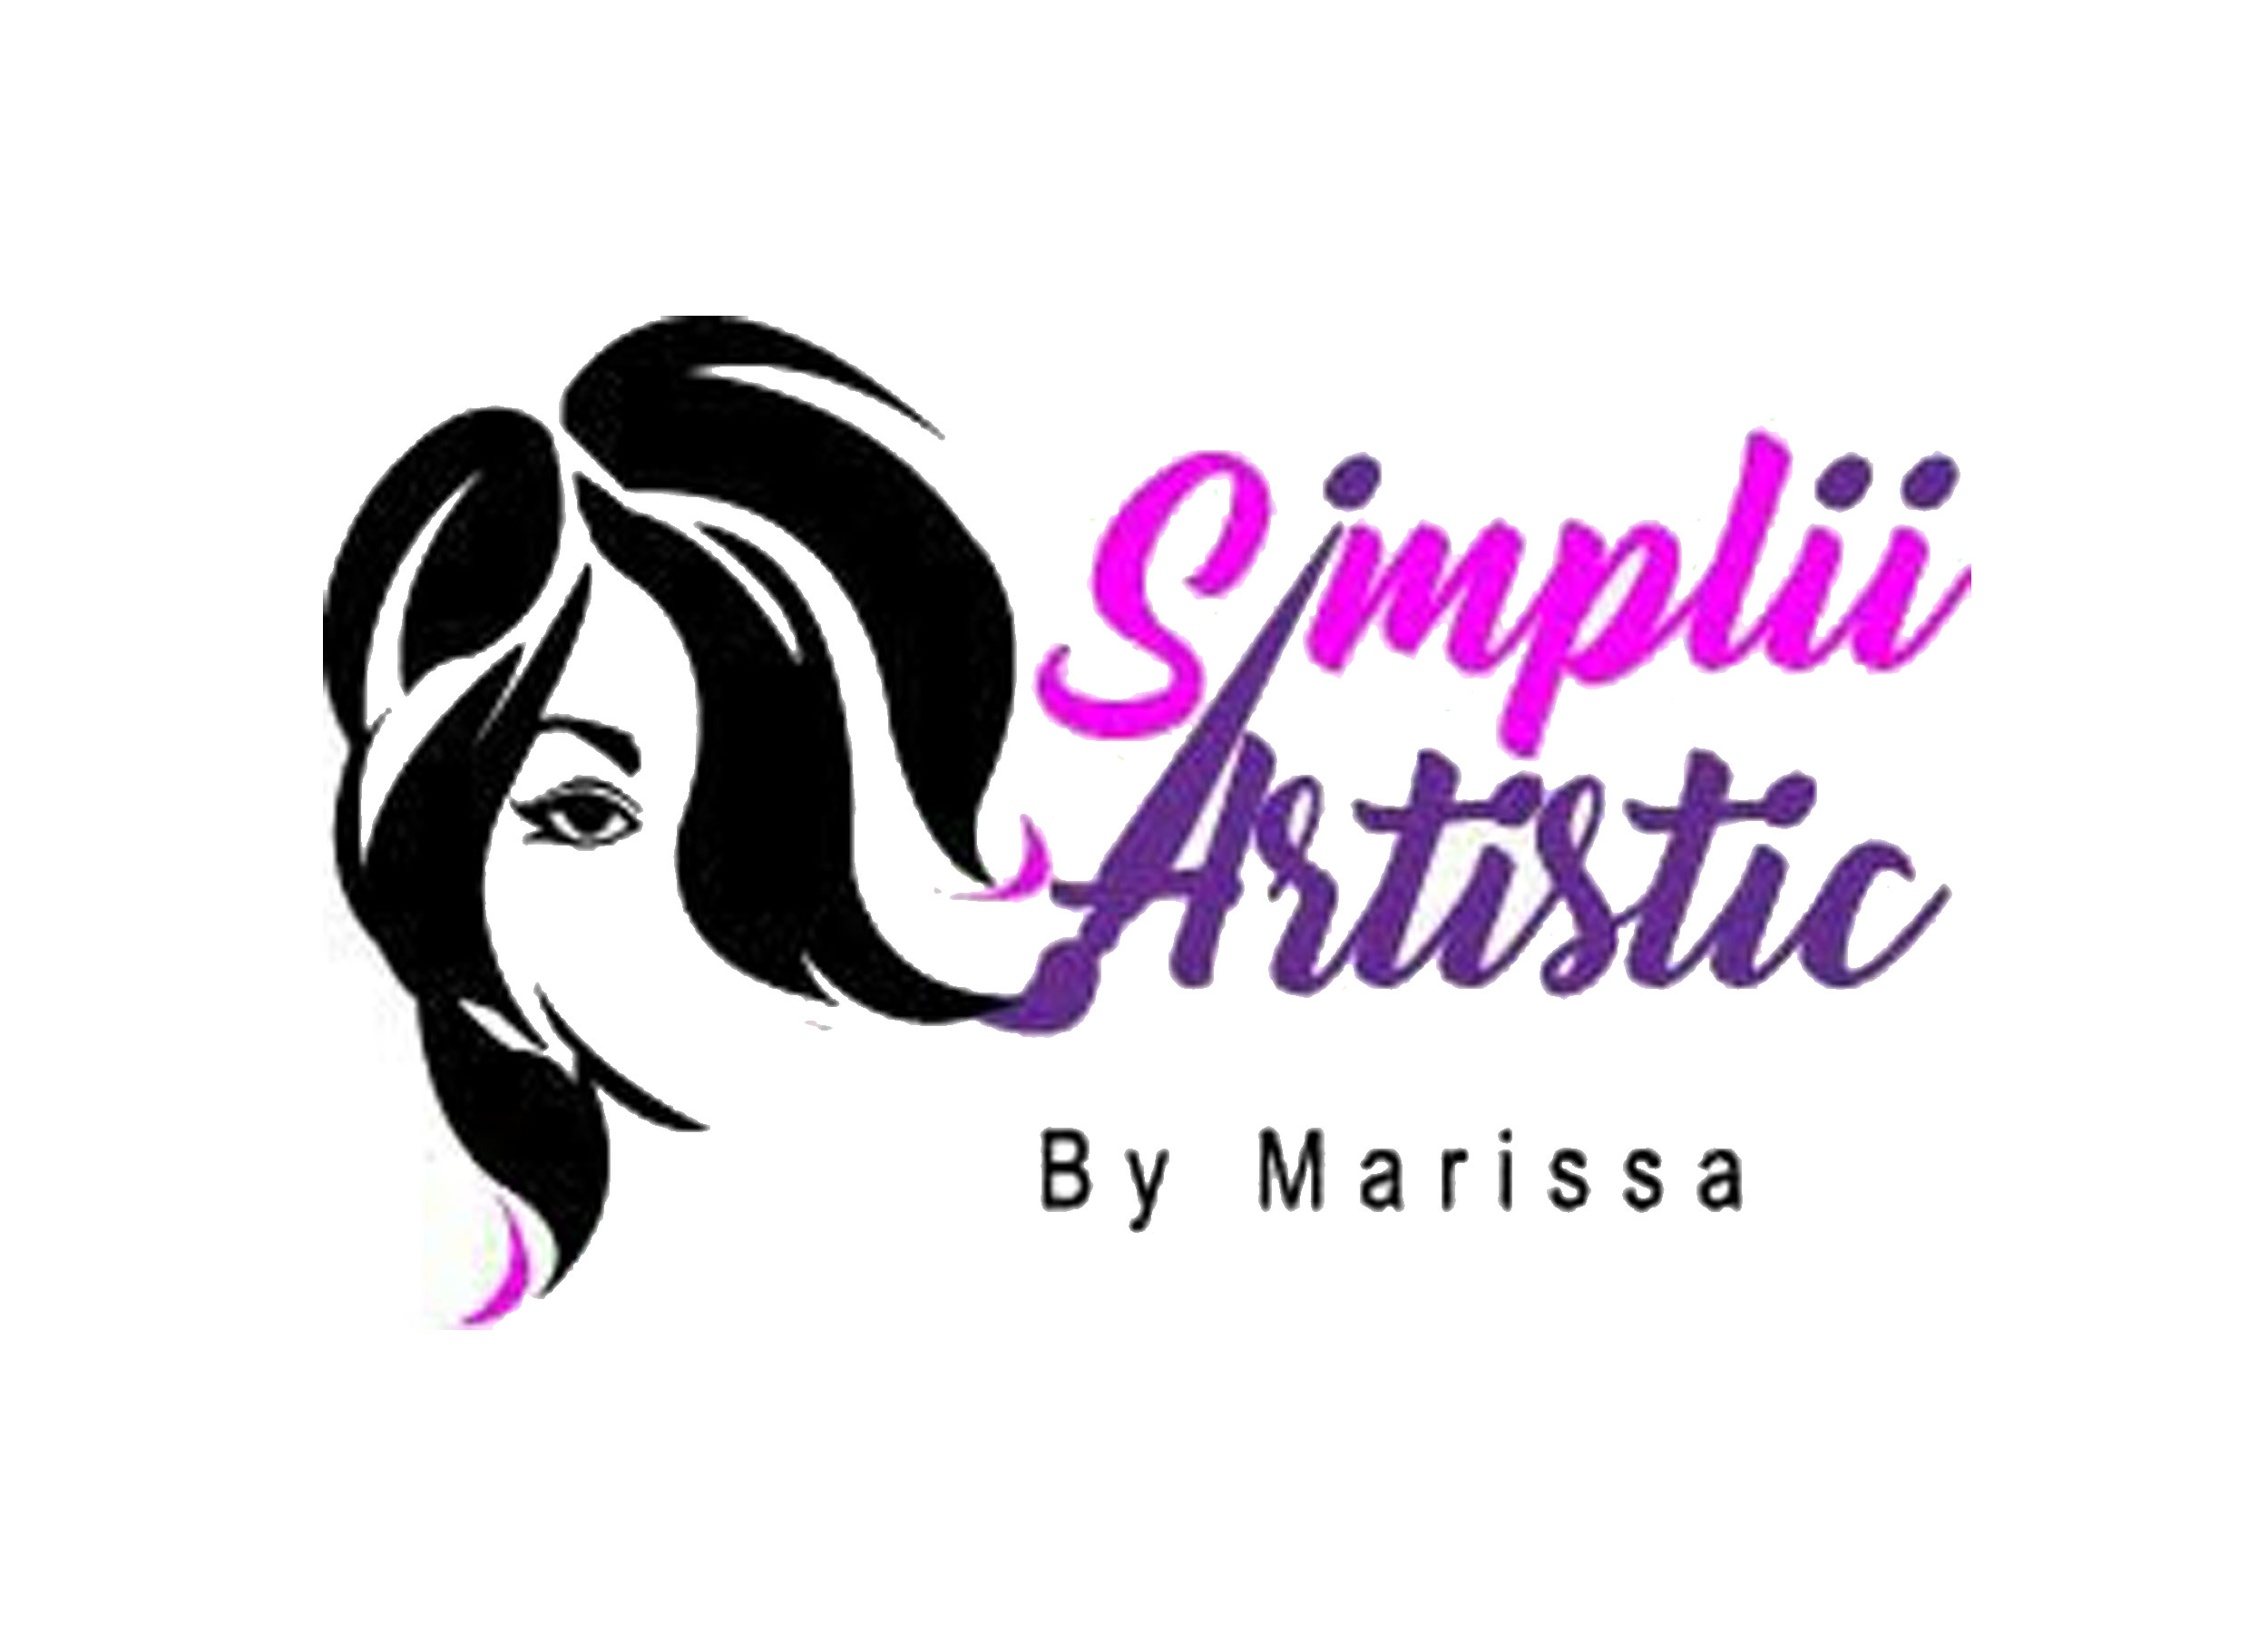 Simplii Artistic by Marissa